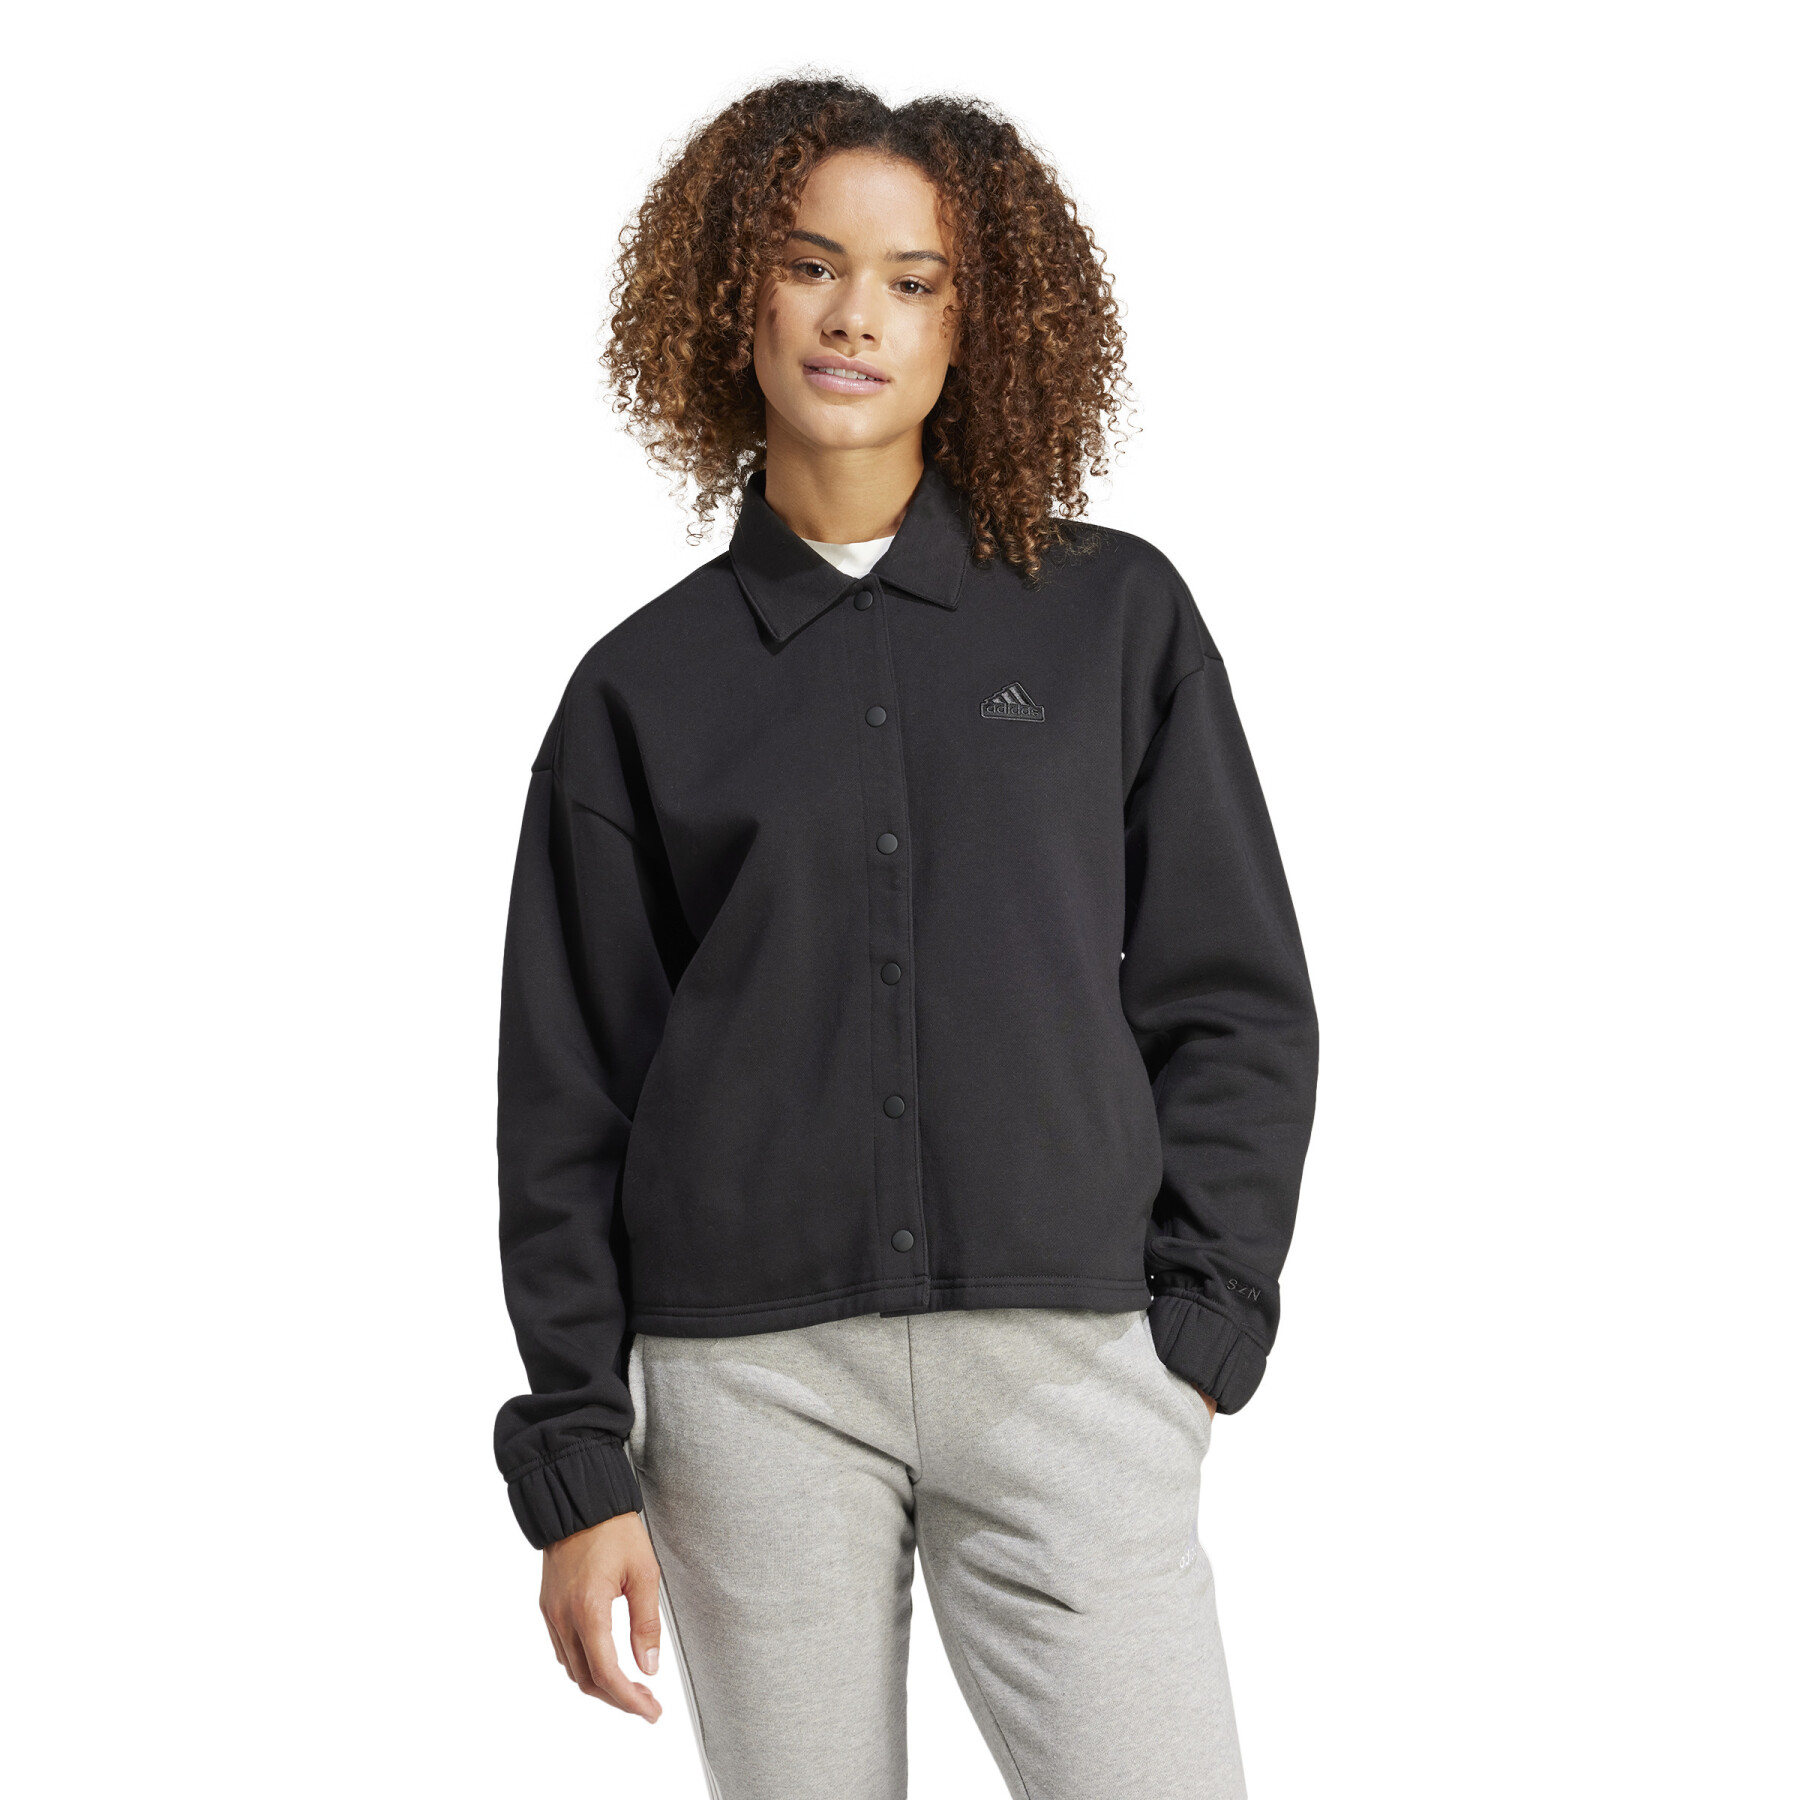 Graphic jacket SZN ALL trainer Women\'s - Women\'s - adidas - Lifestyle clothing Fleece Jackets